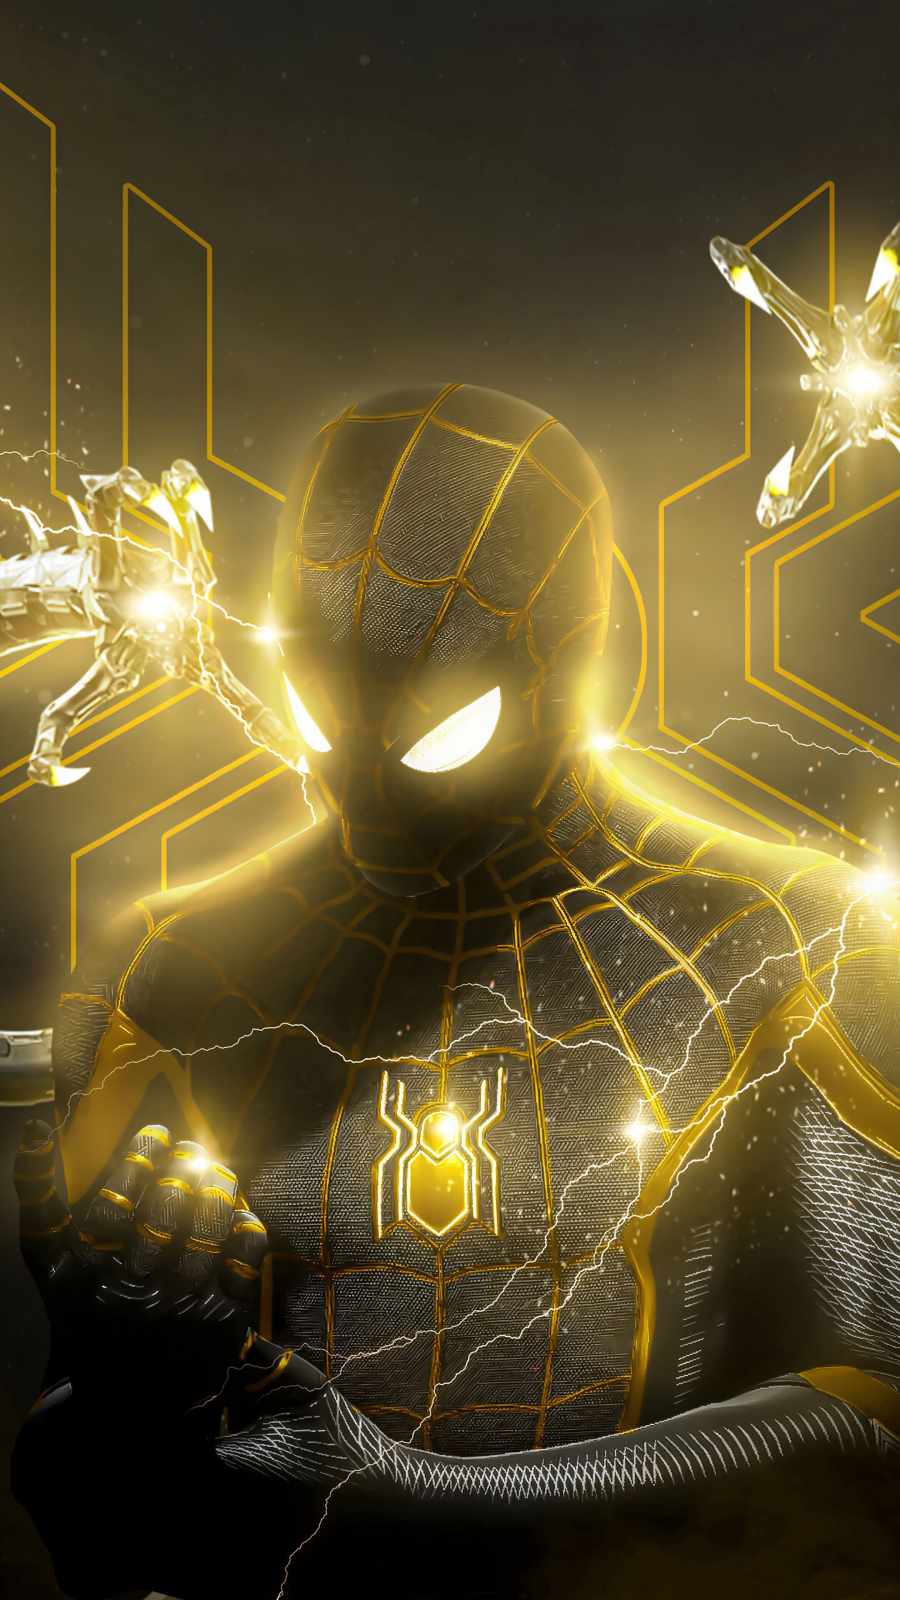 Spiderman New Powers iPhone Wallpaper